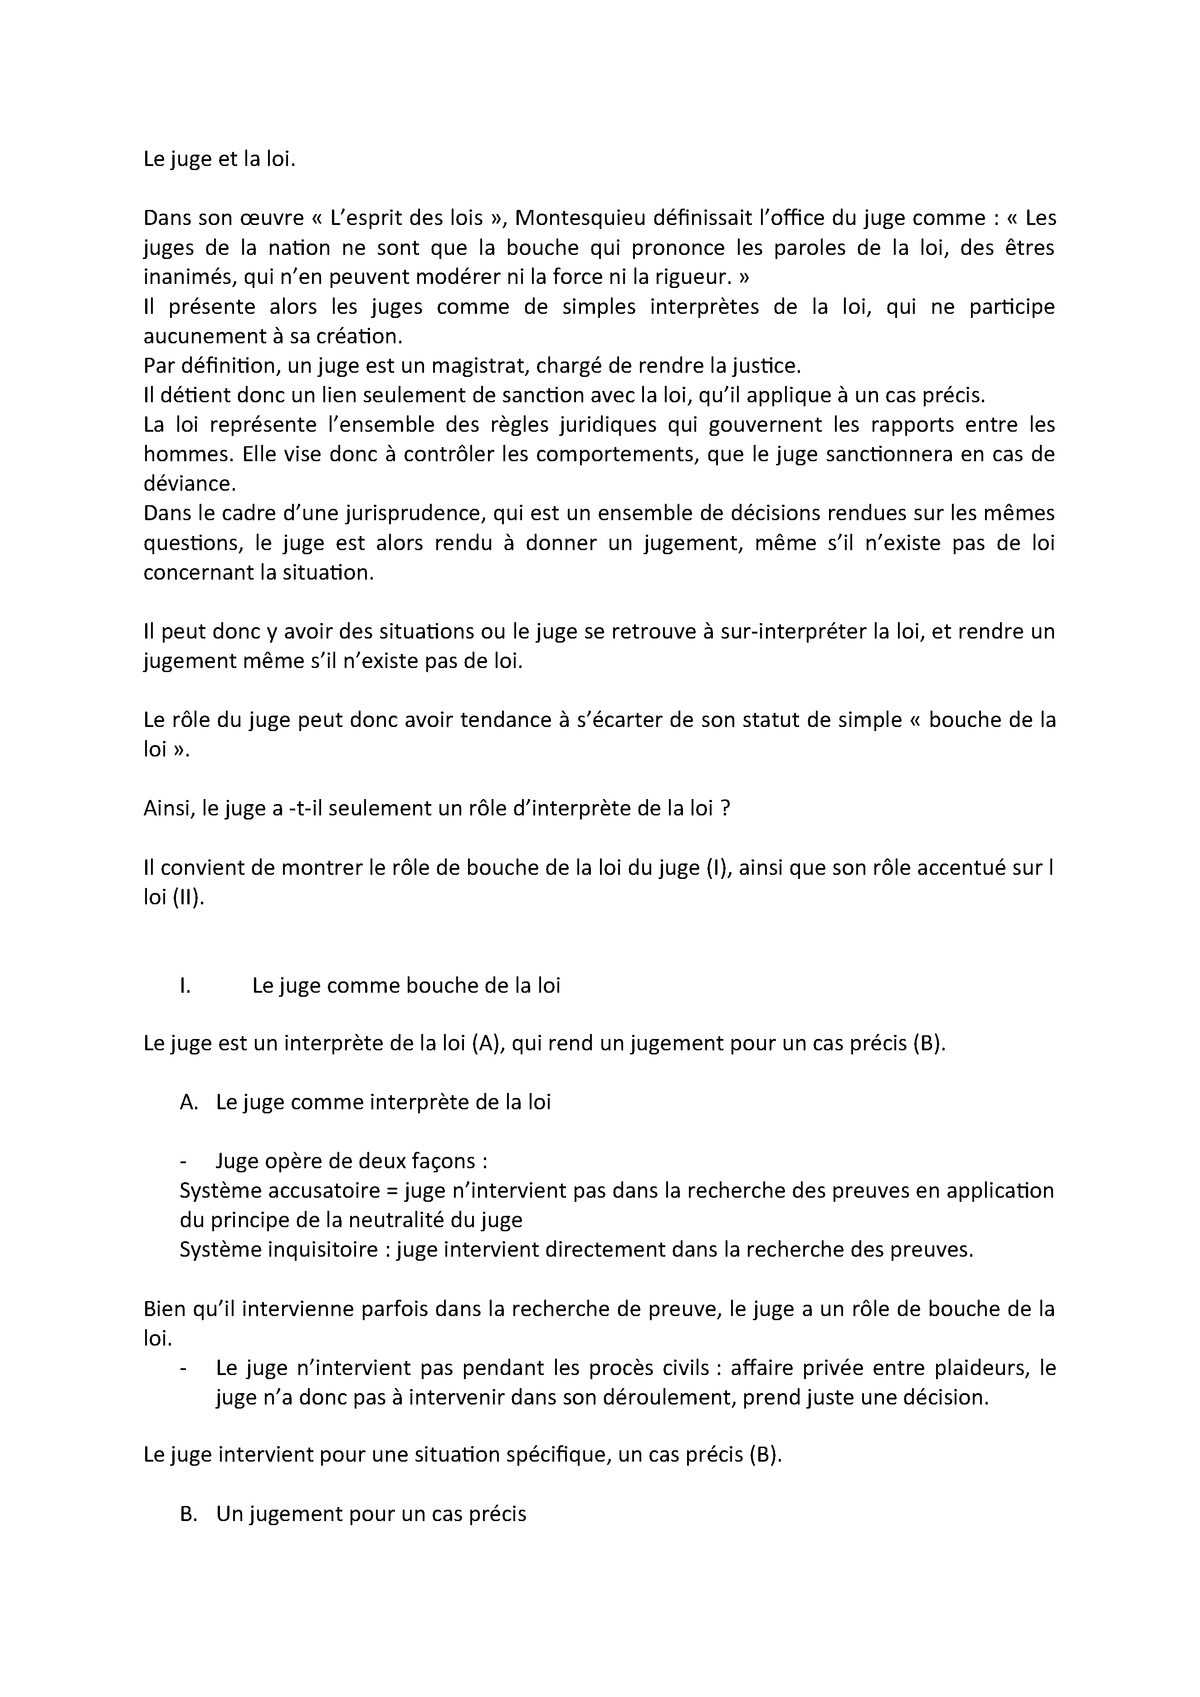 Civil draftsman resume sample